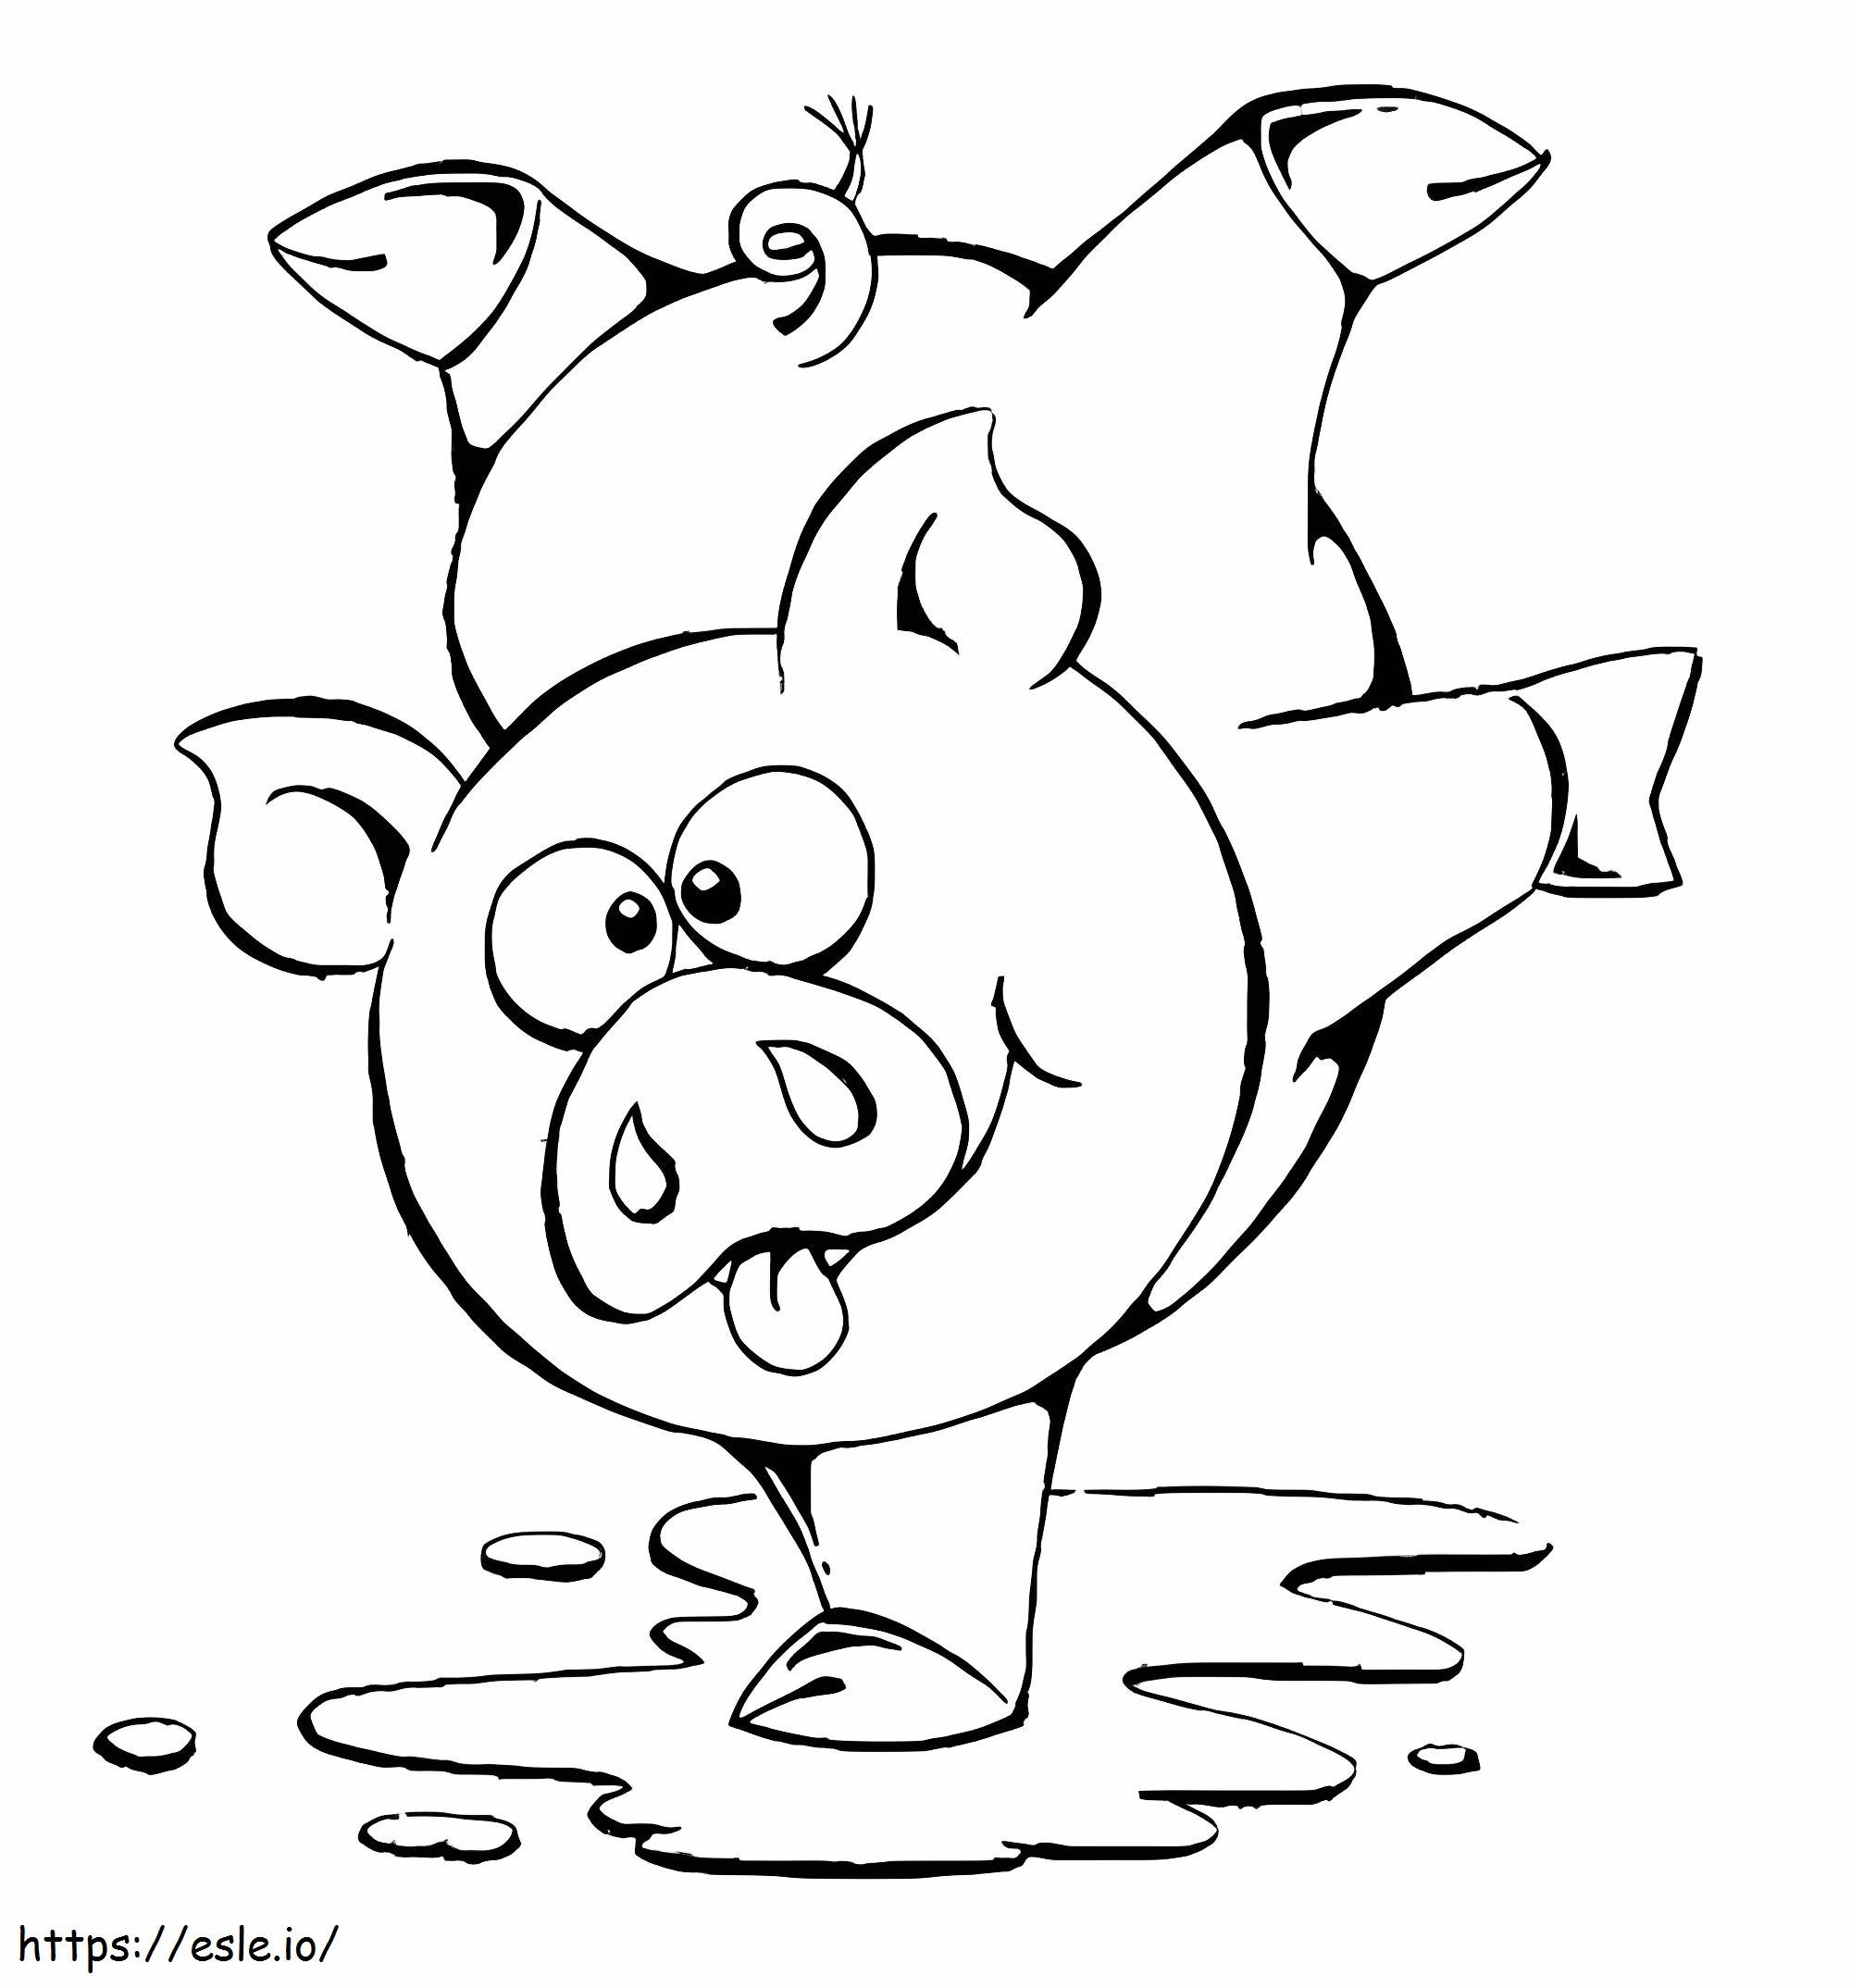 Pig Having Fun coloring page